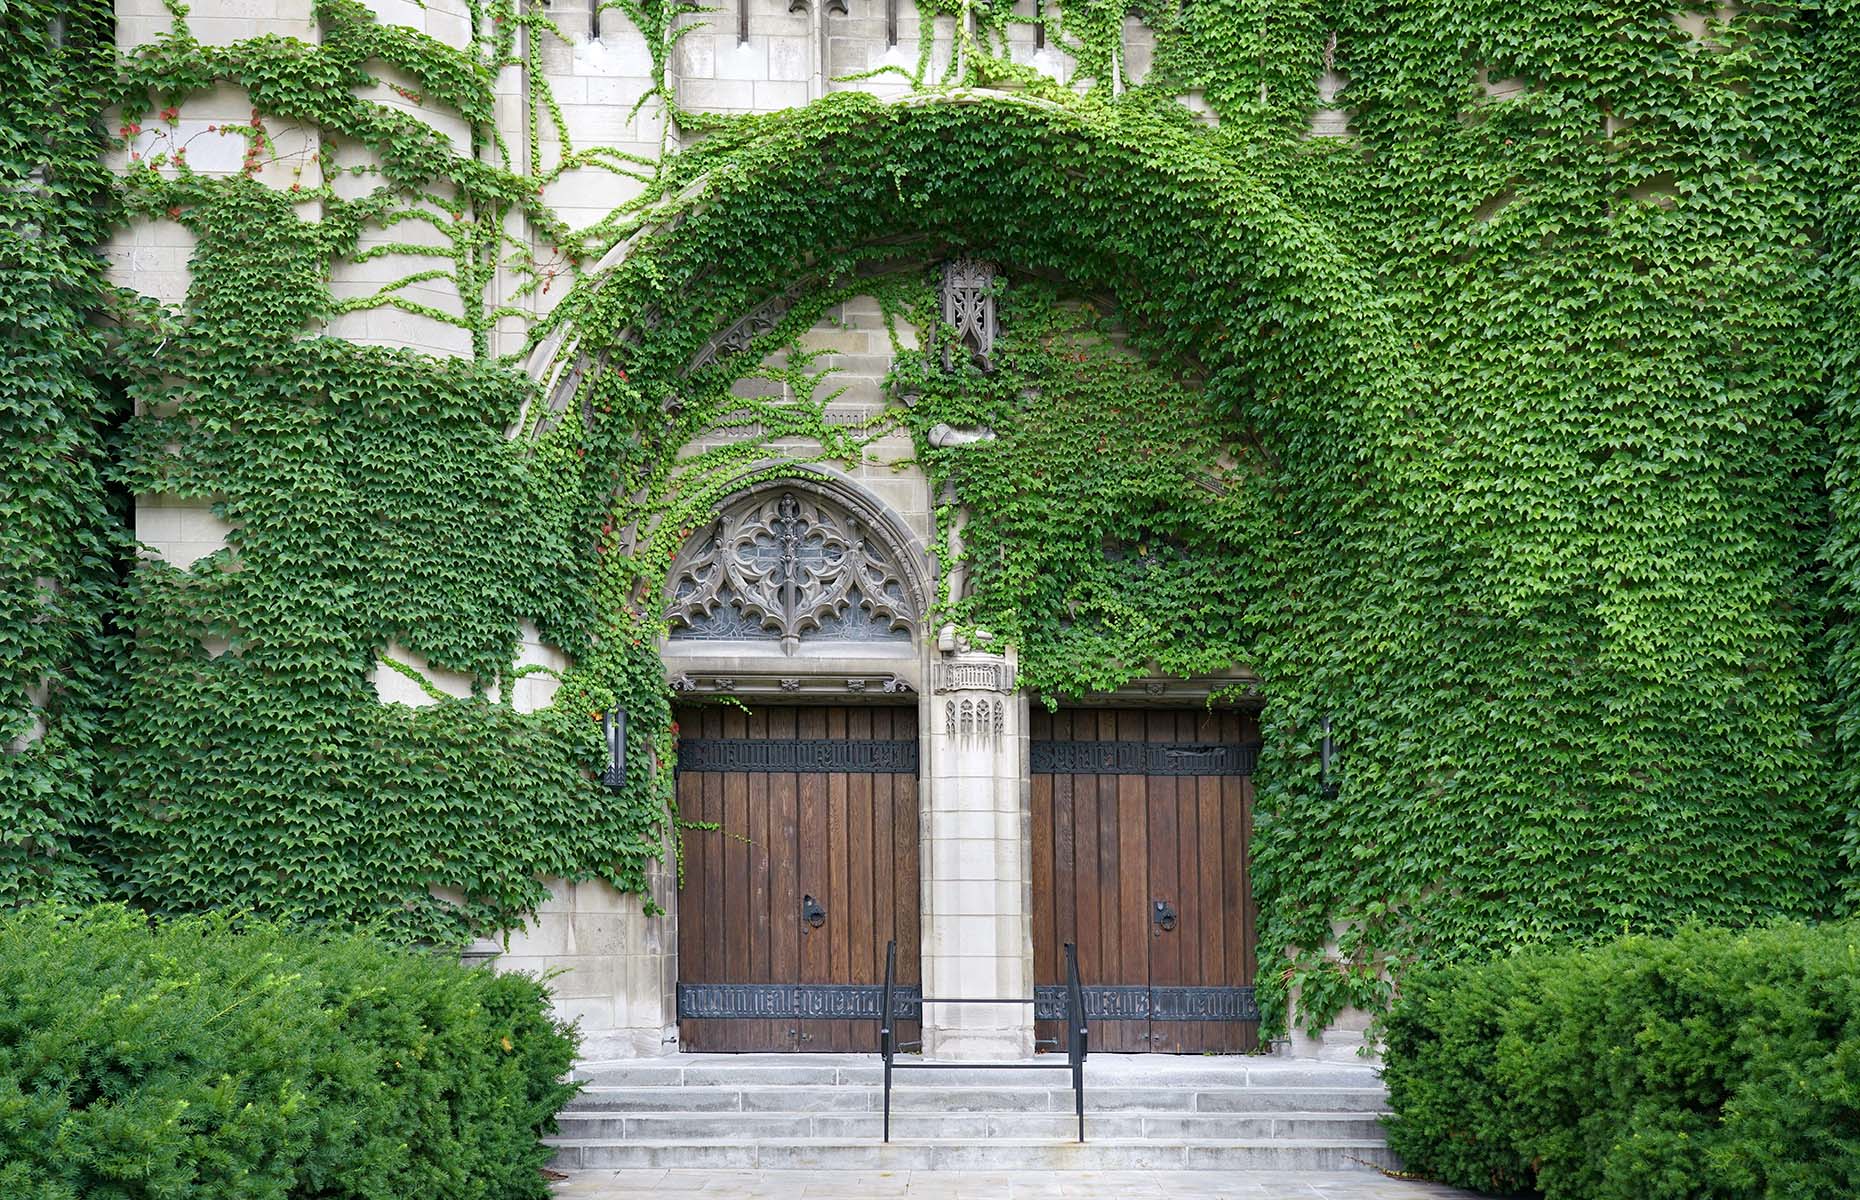 University of Chicago campus (Image: P Spiro/Alamy)